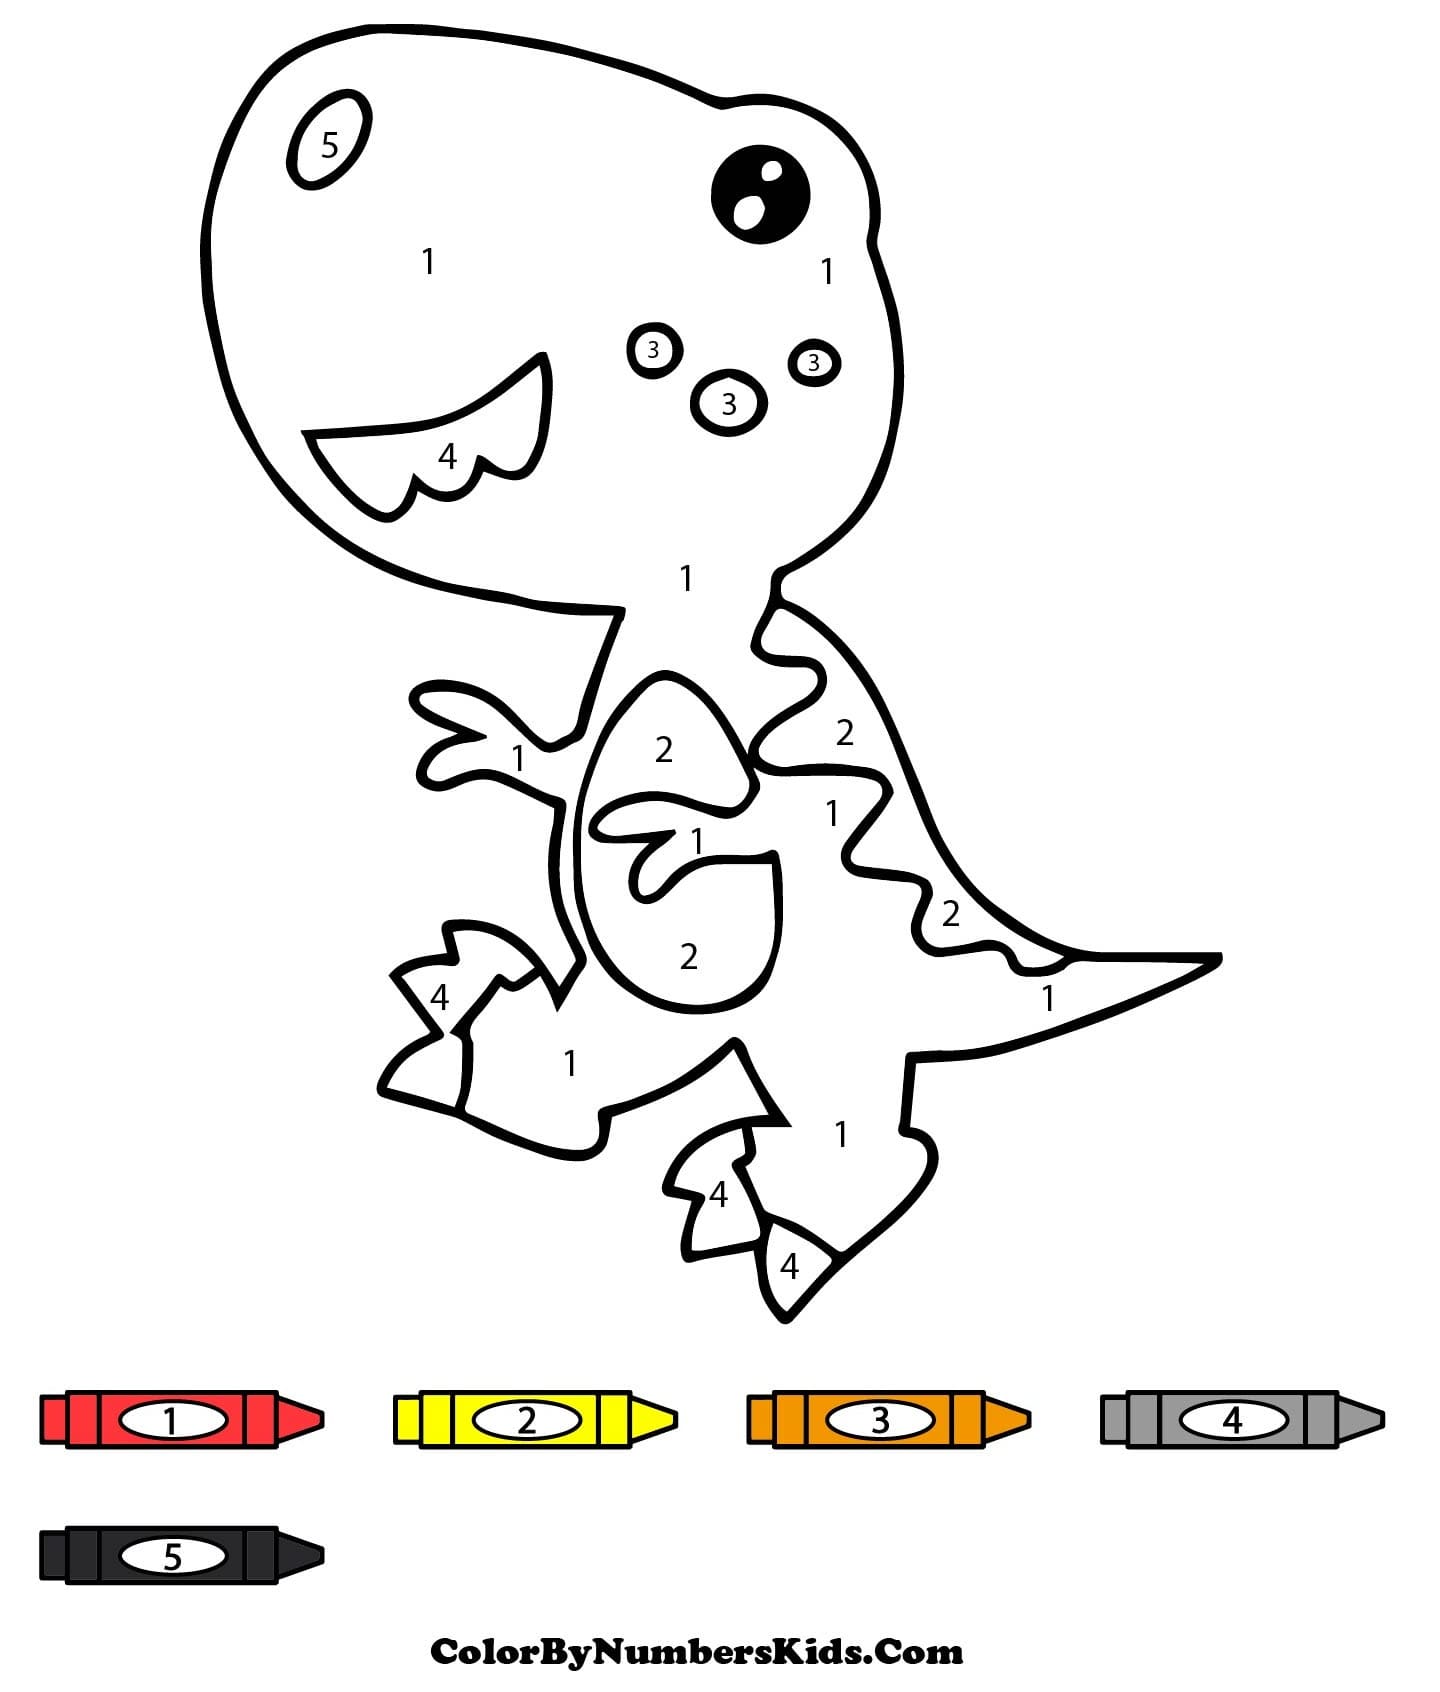 Dinosaur Color By Number For Kids